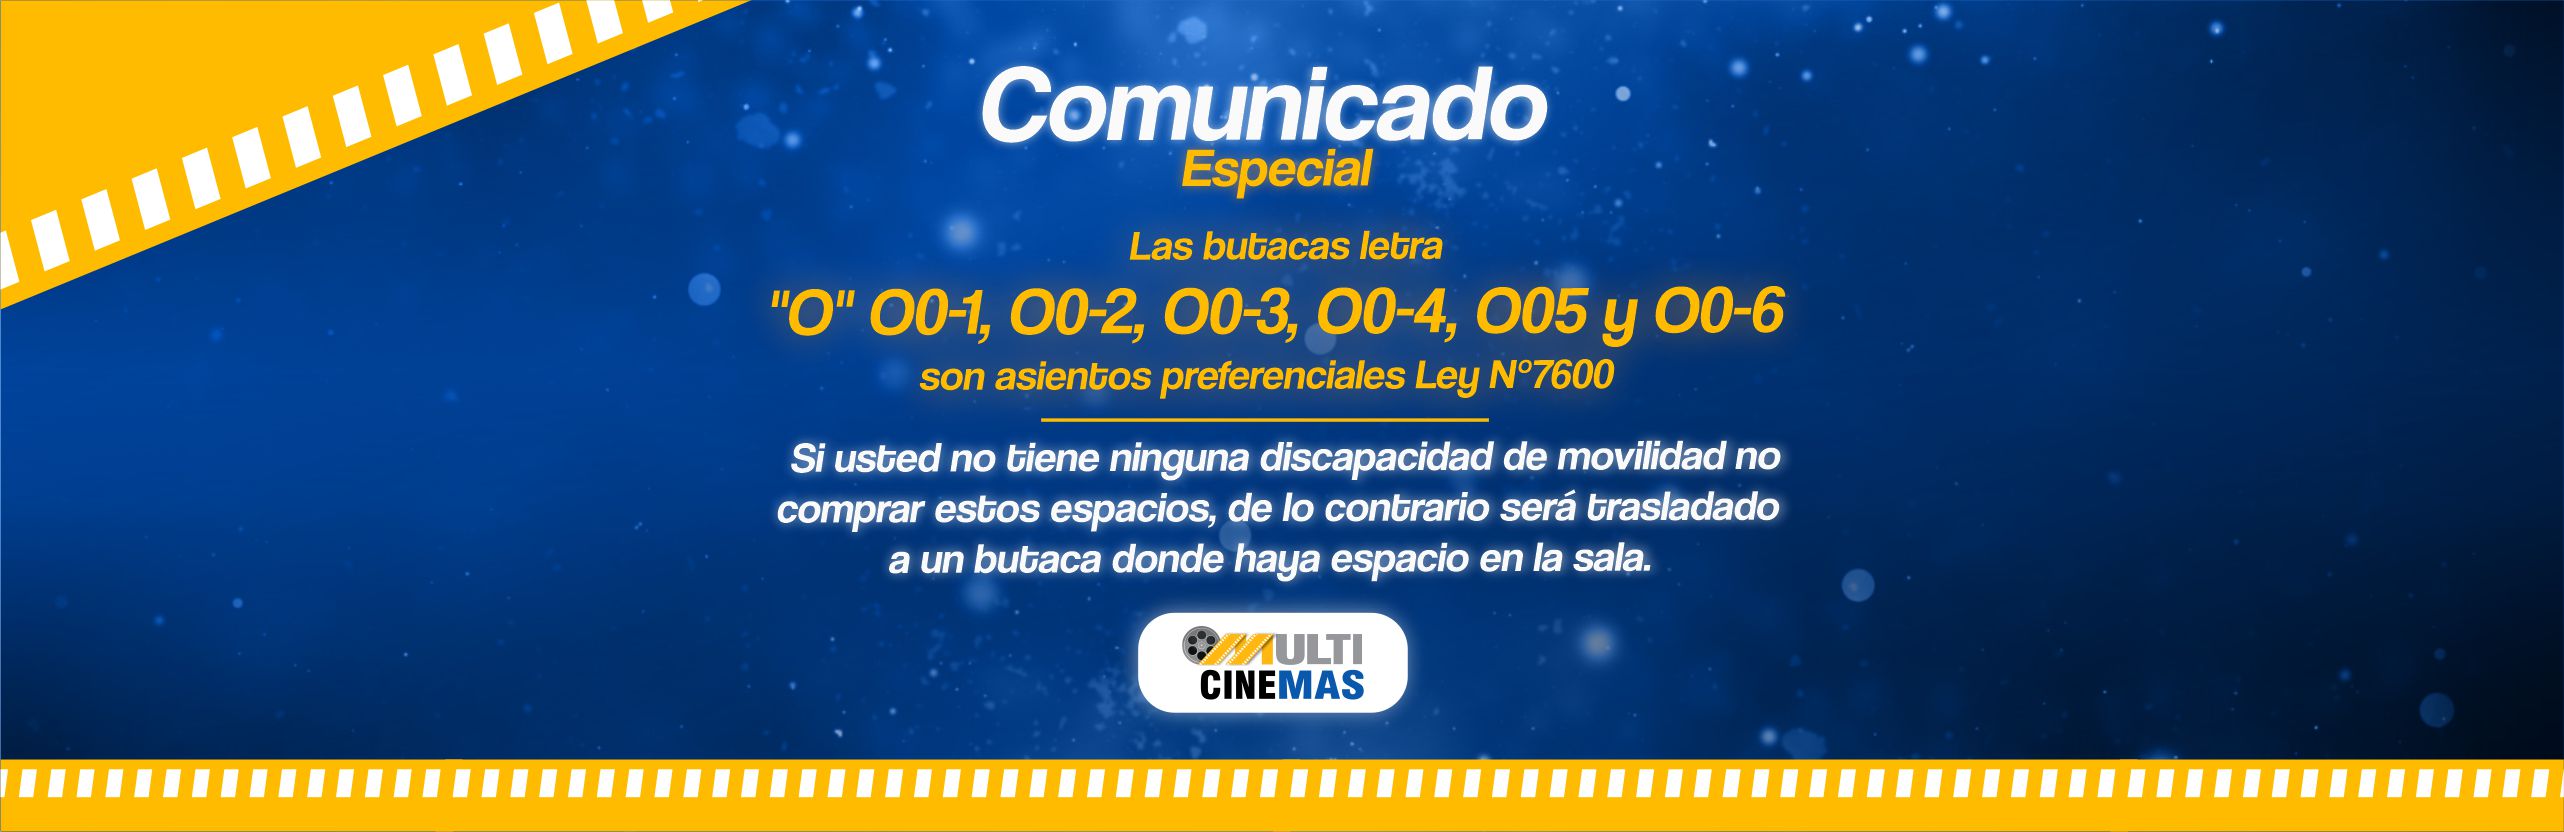 cominicado-web-ley-7600